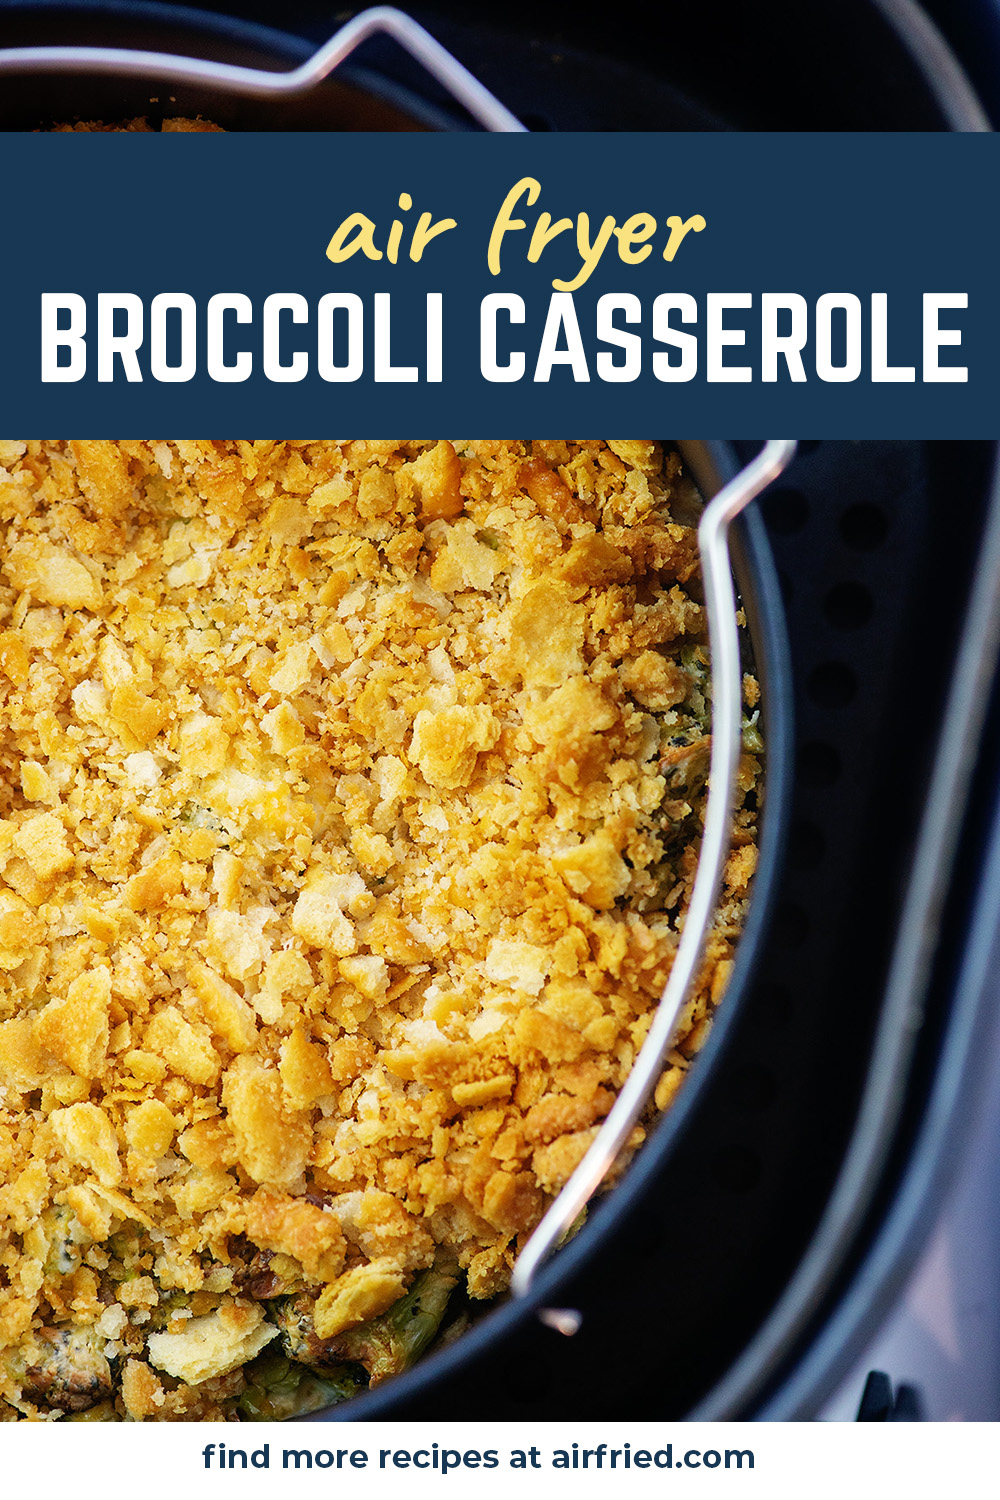 Broccoli casserole in an air fryer basket